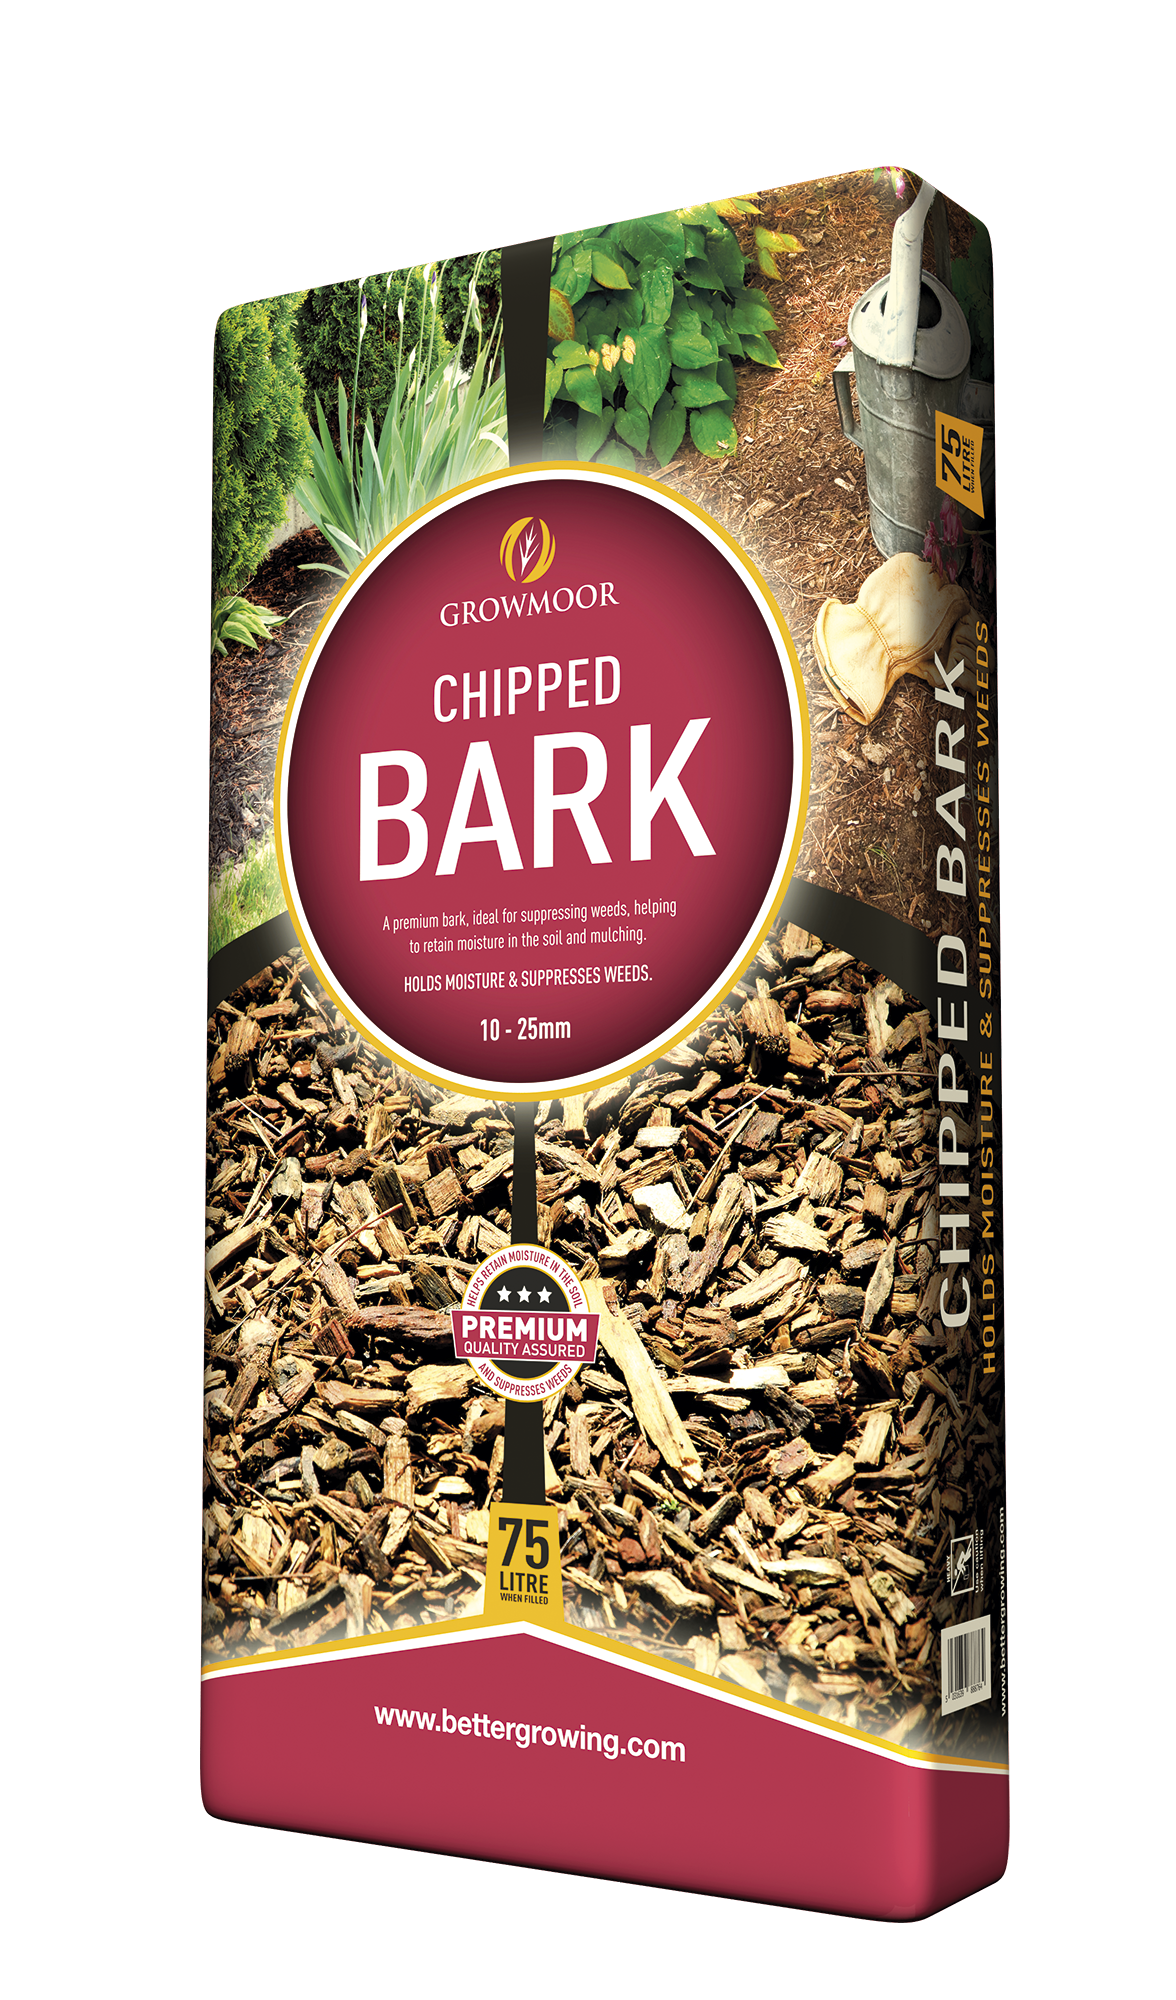 Growmoor Chipped Bark 75L